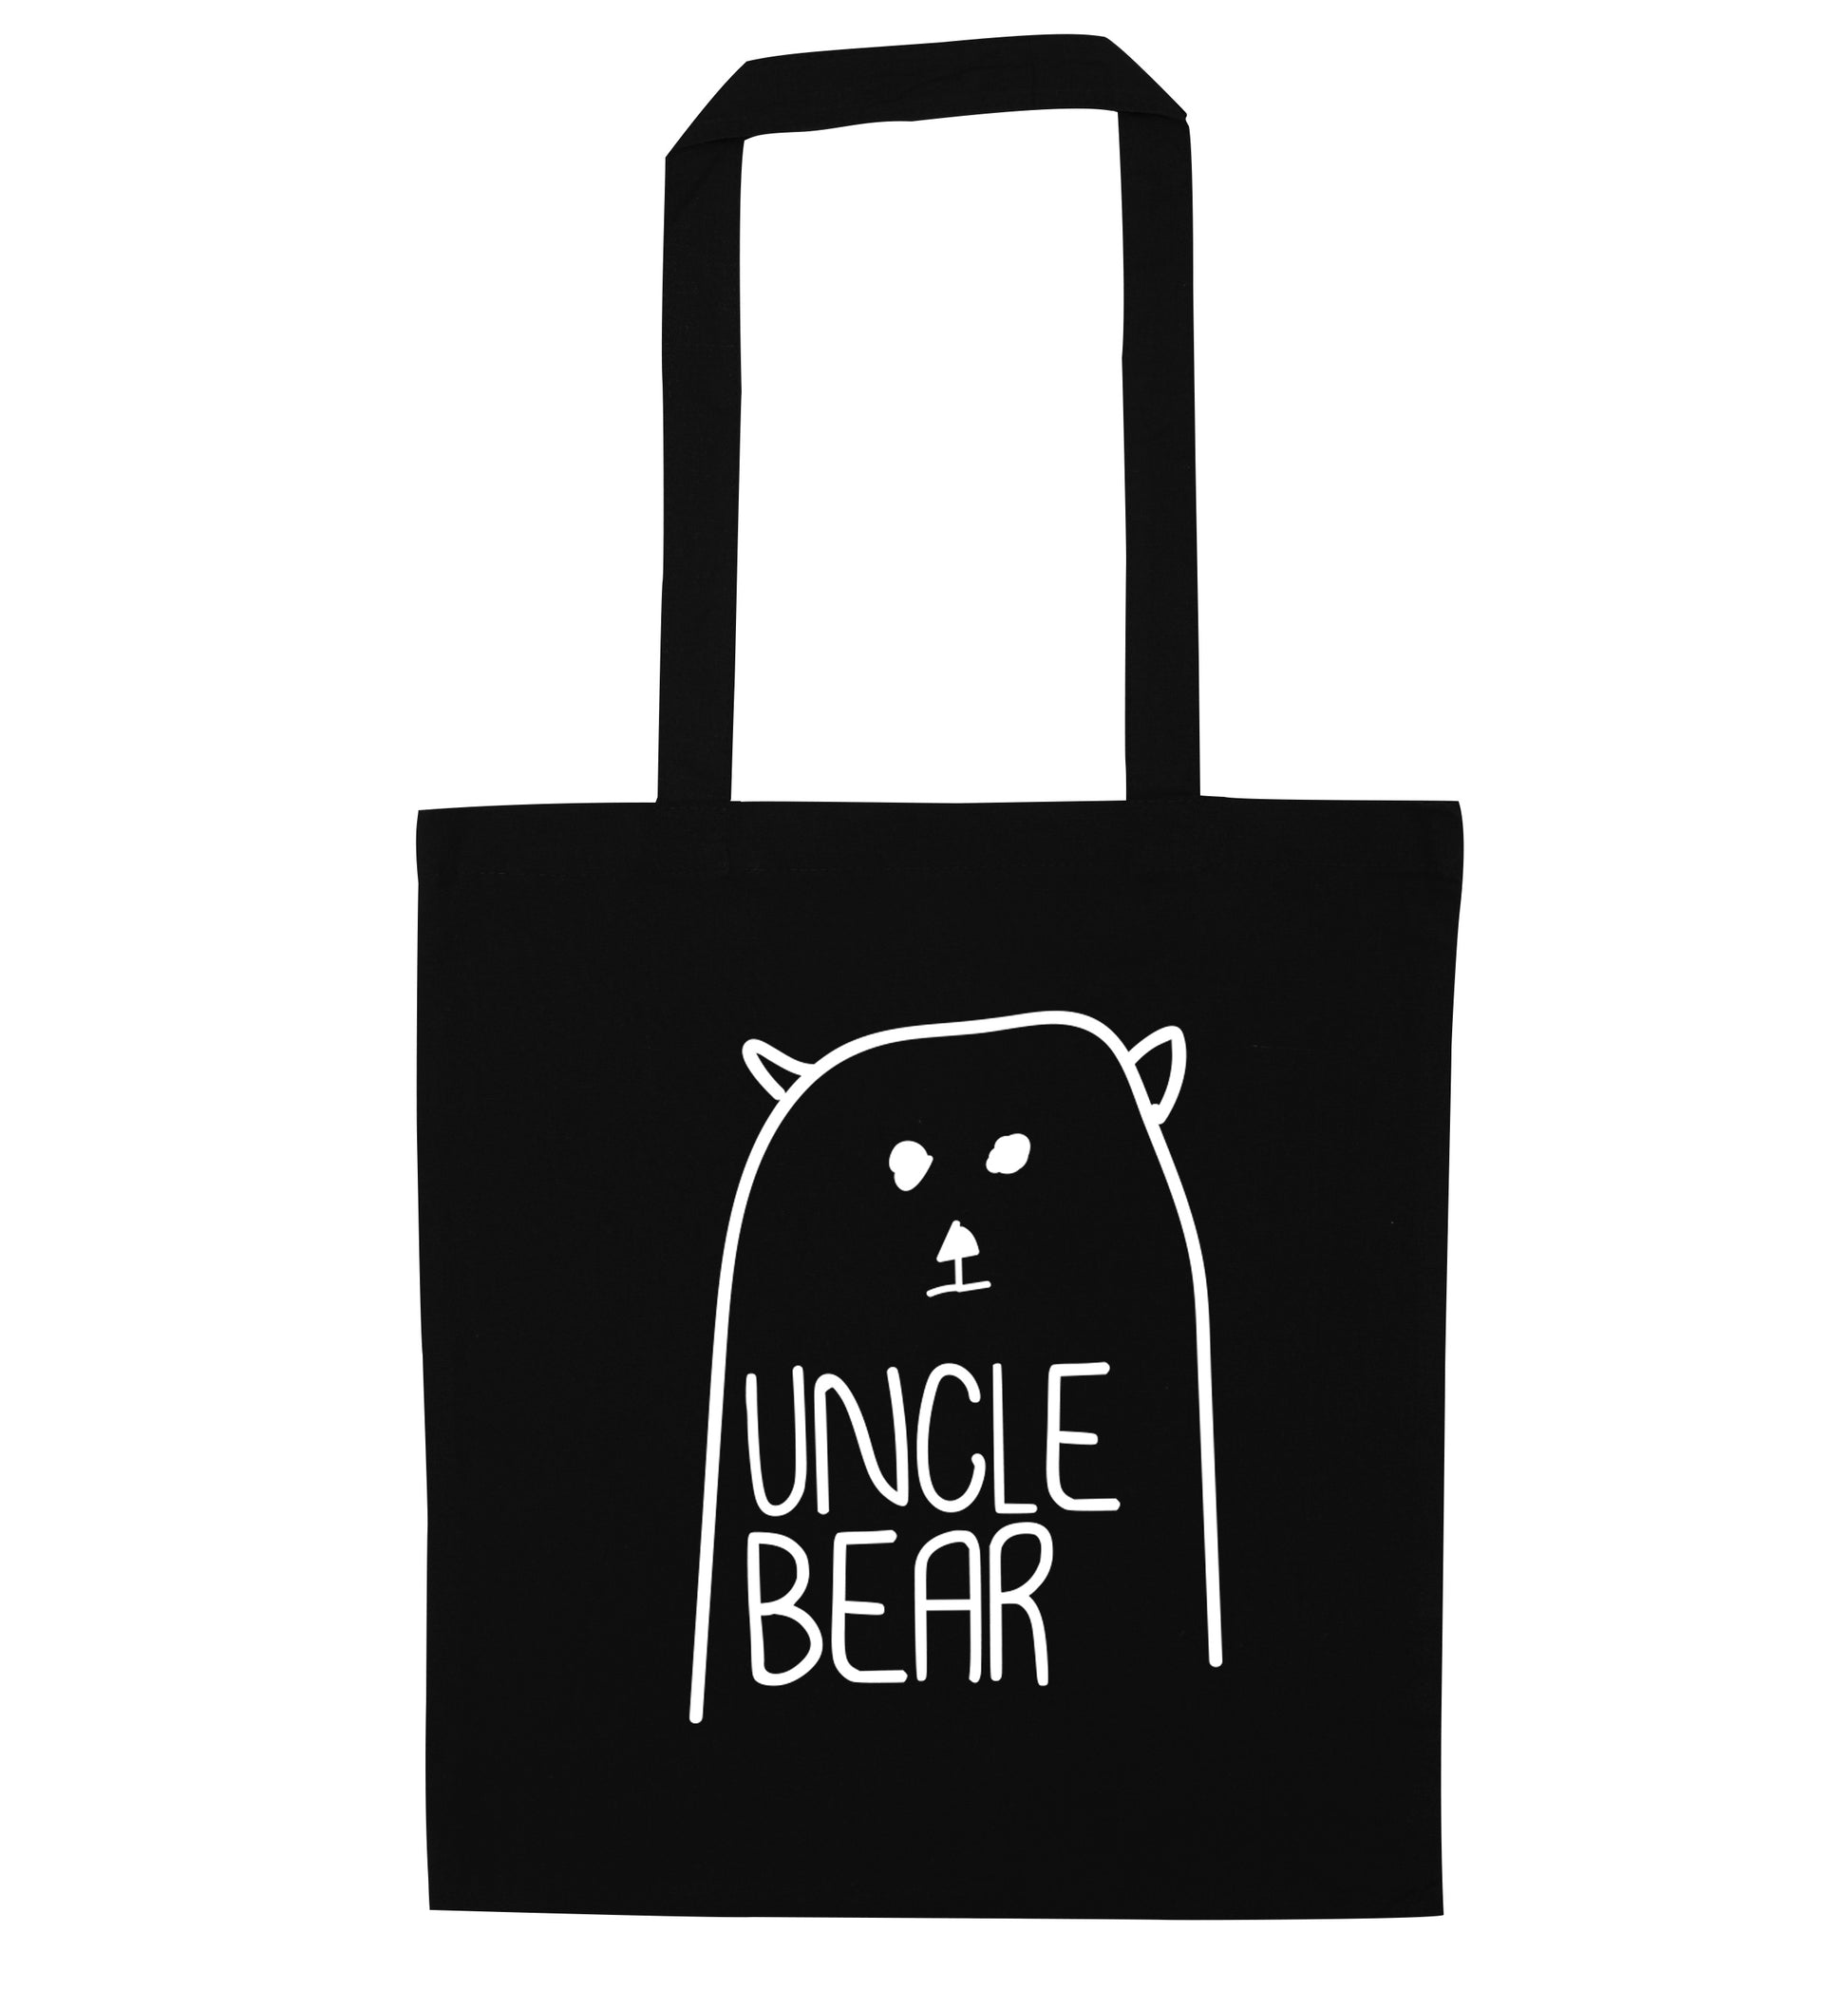 Uncle bear black tote bag